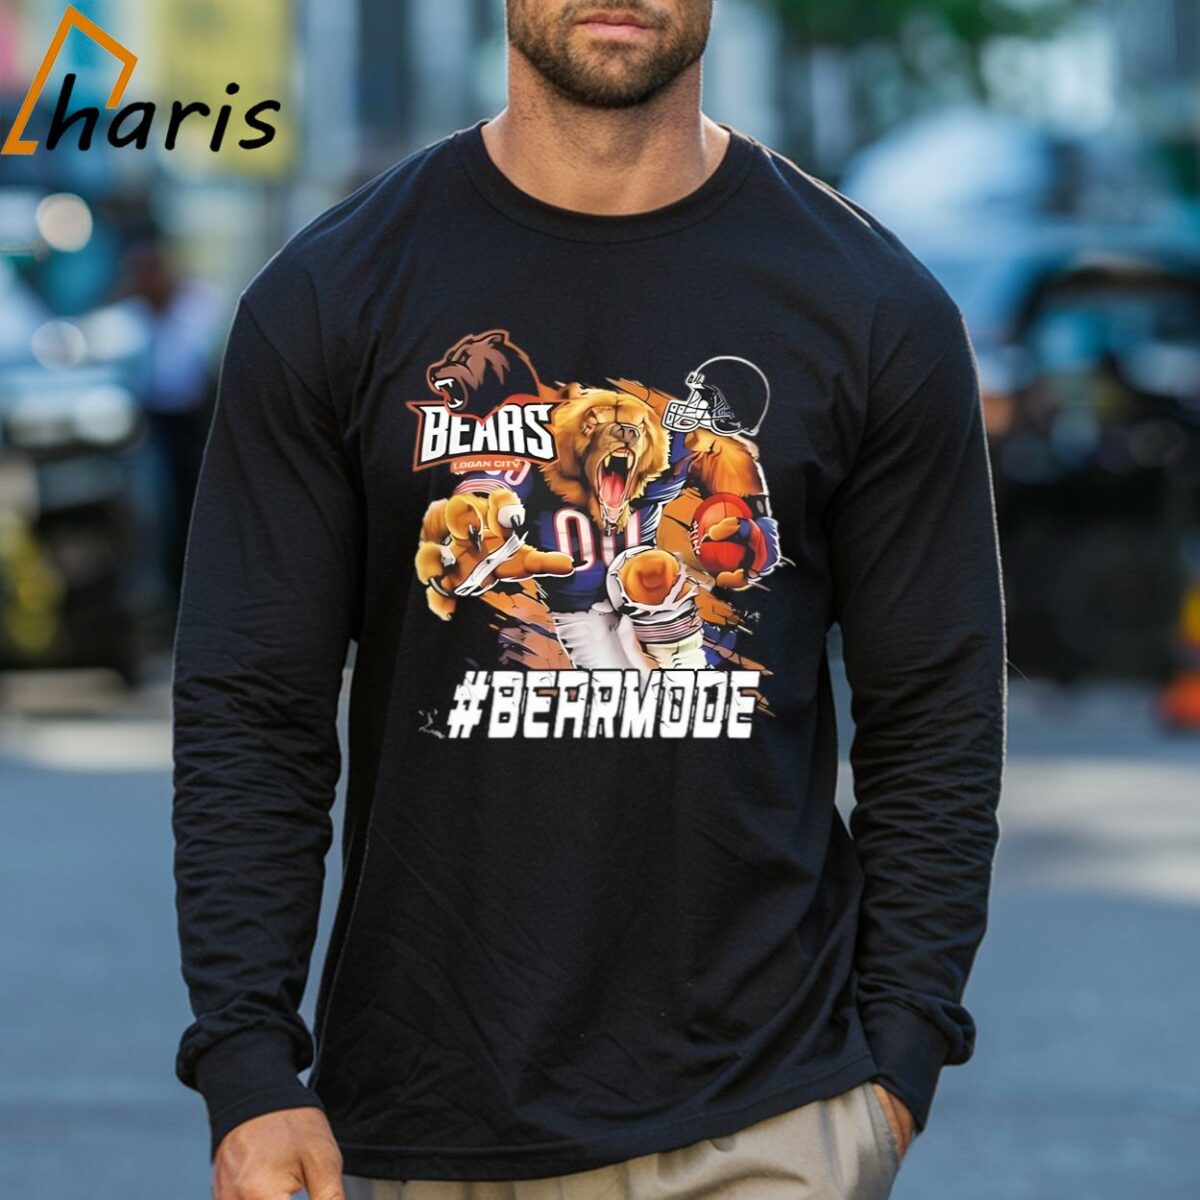 Bears Logan City Gridiron Club BEARMODE Shirt 3 Long sleeve shirt